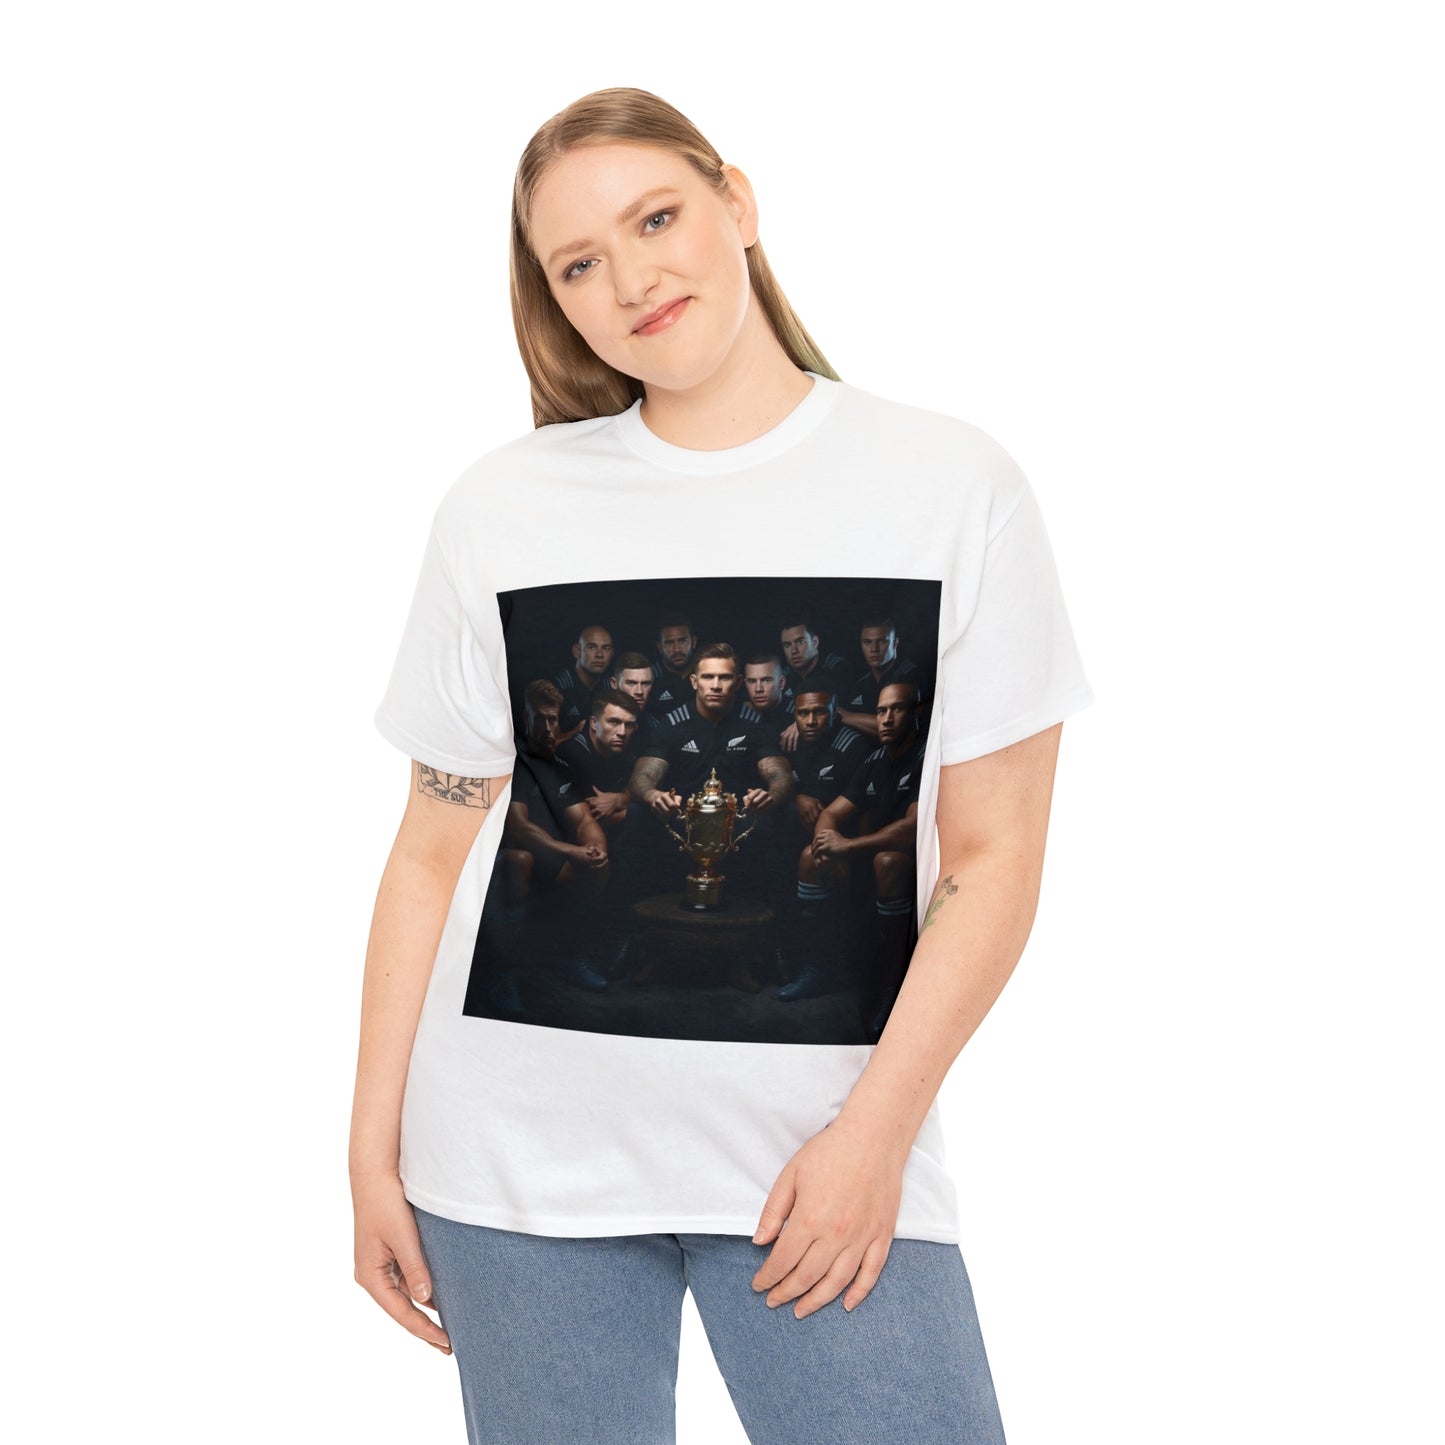 All Blacks Winners Photoshoot - light shirts